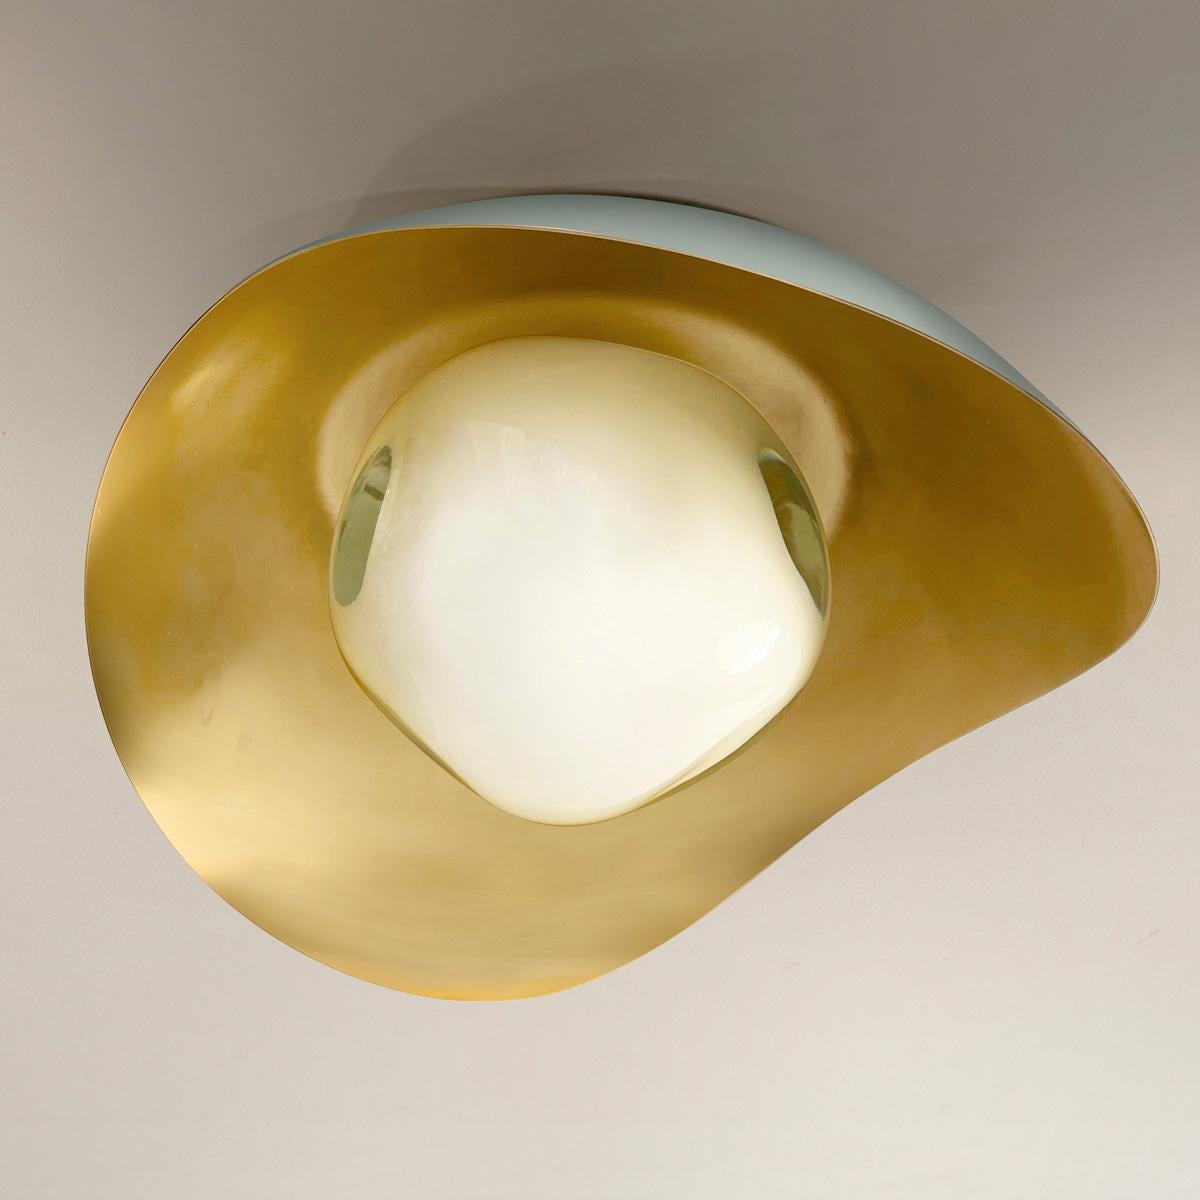 Organic Modern Perla Flushmount Ceiling Light by Gaspare Asaro-Satin Brass/Acqua Finish For Sale